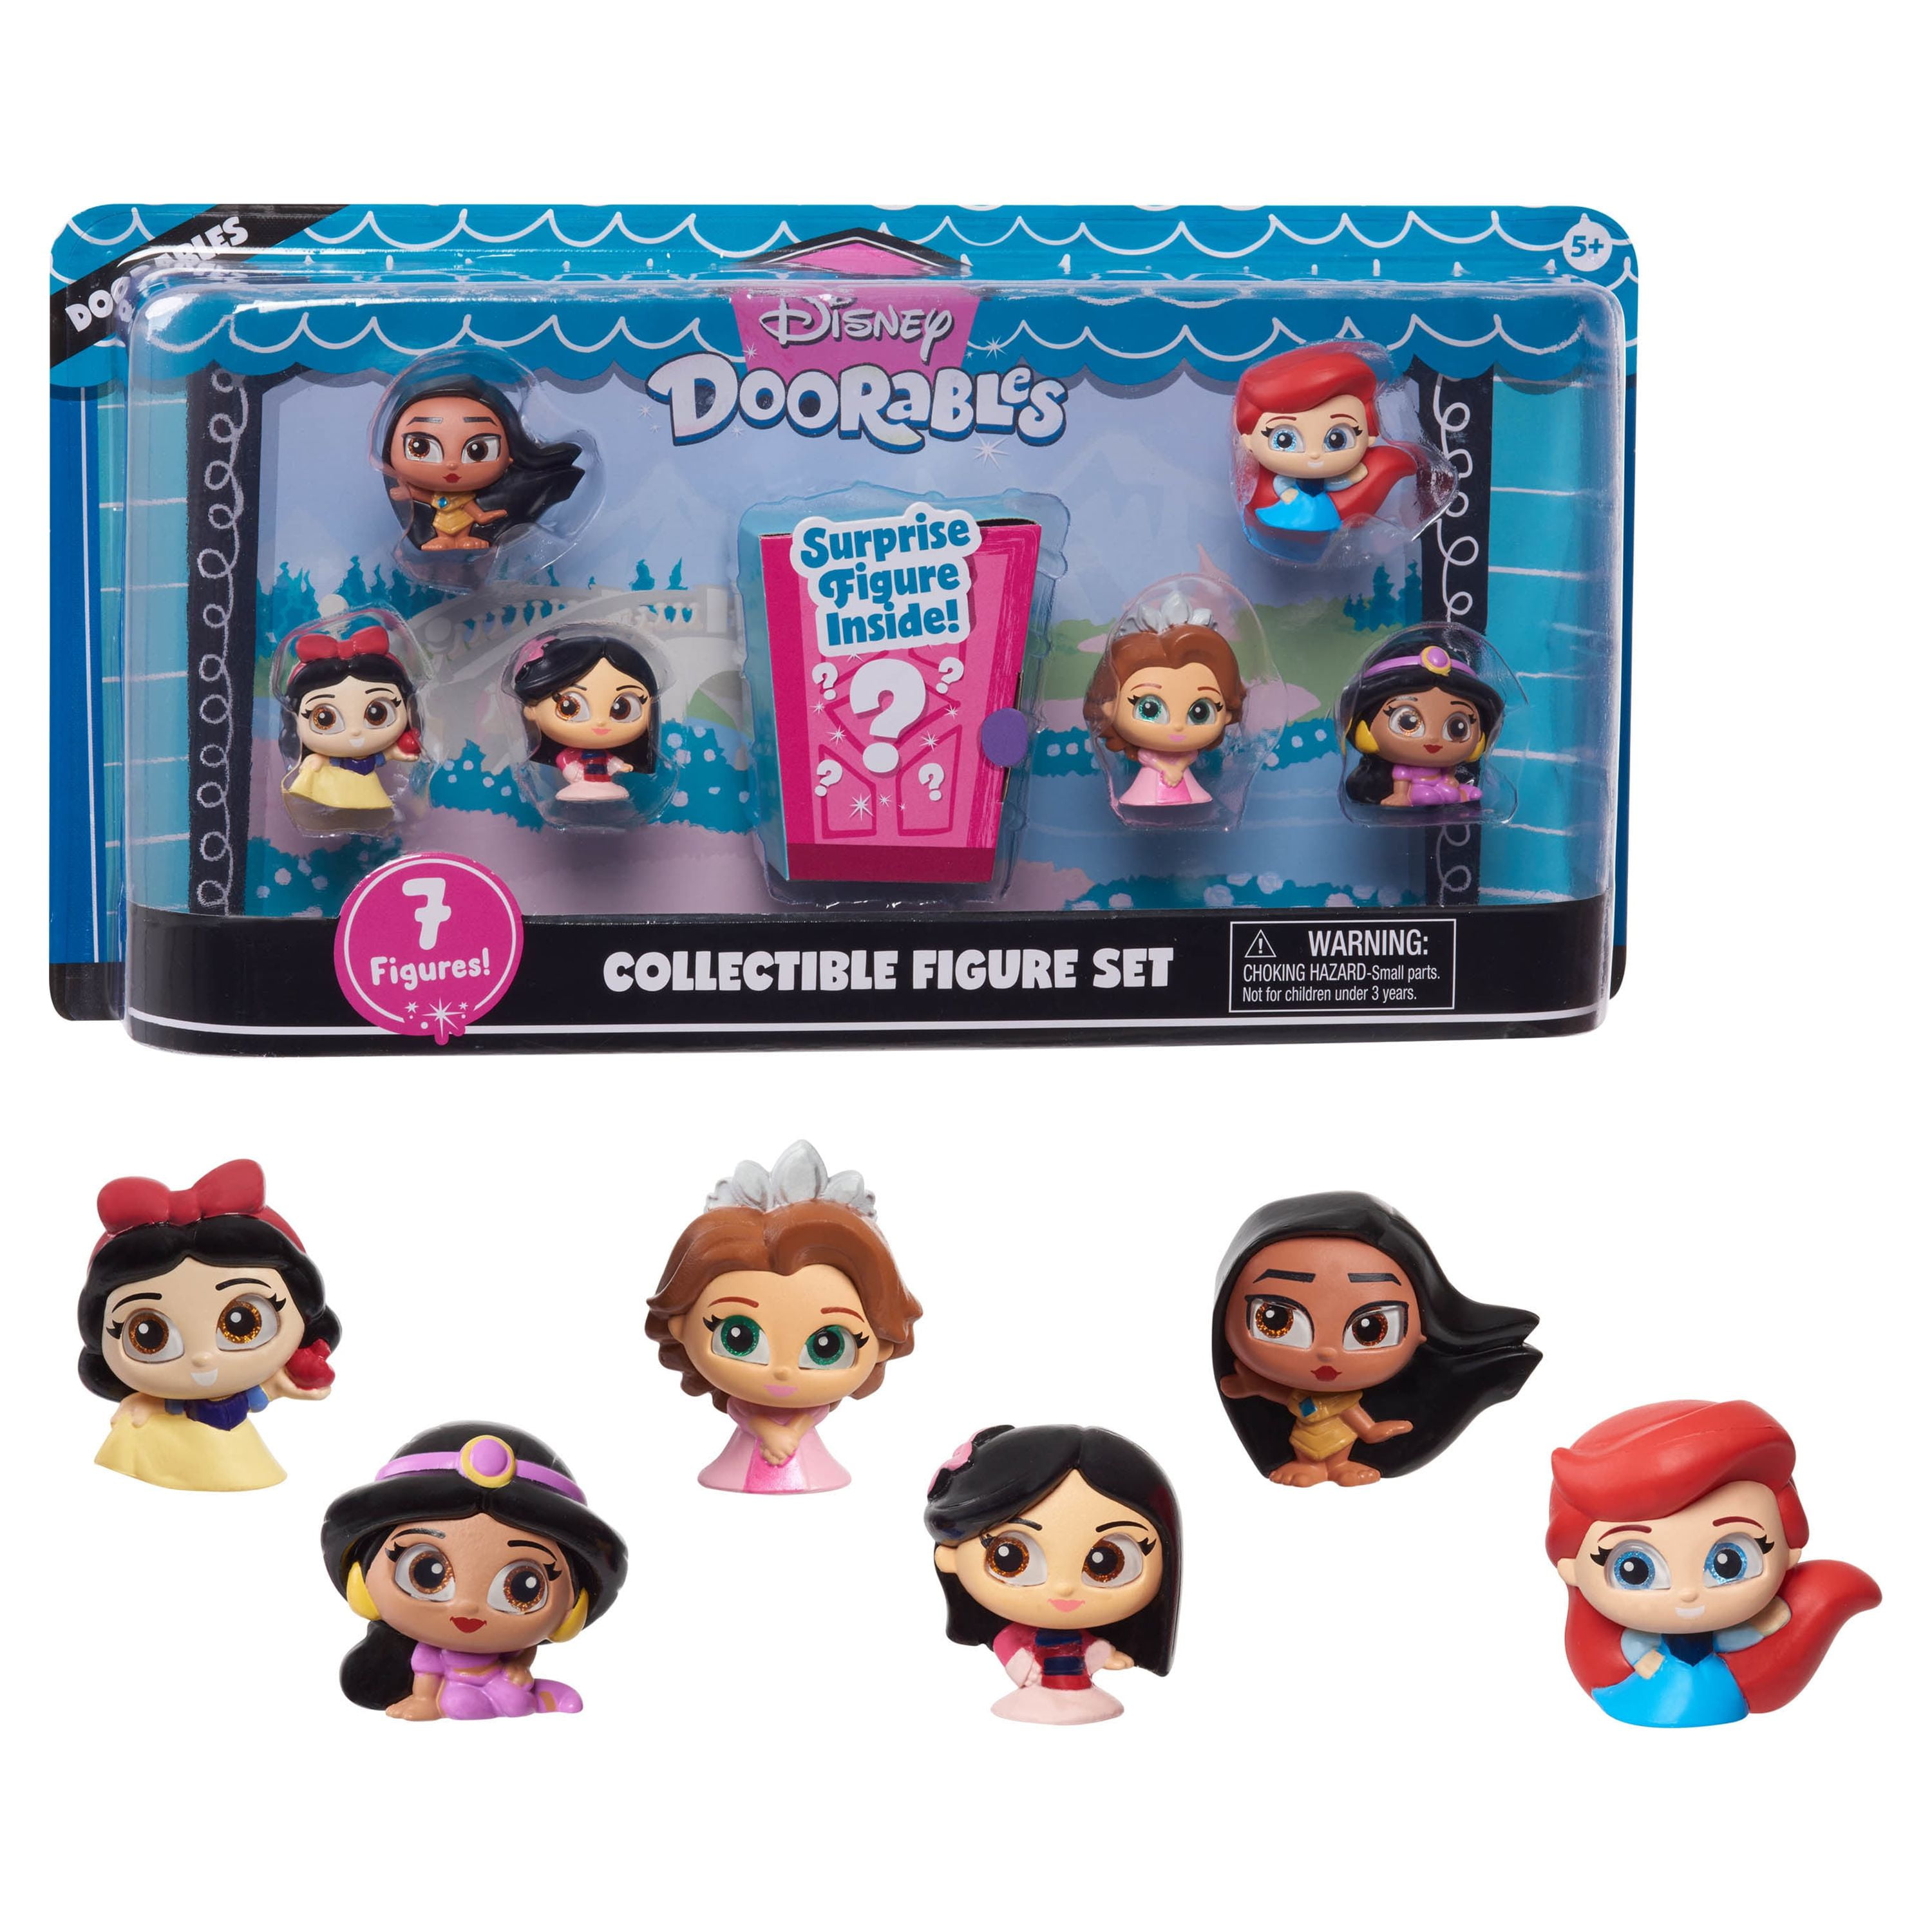 Disney Doorables Pixar Fest Collectible Figure Pack , Kids Toys for Ages 3  up 